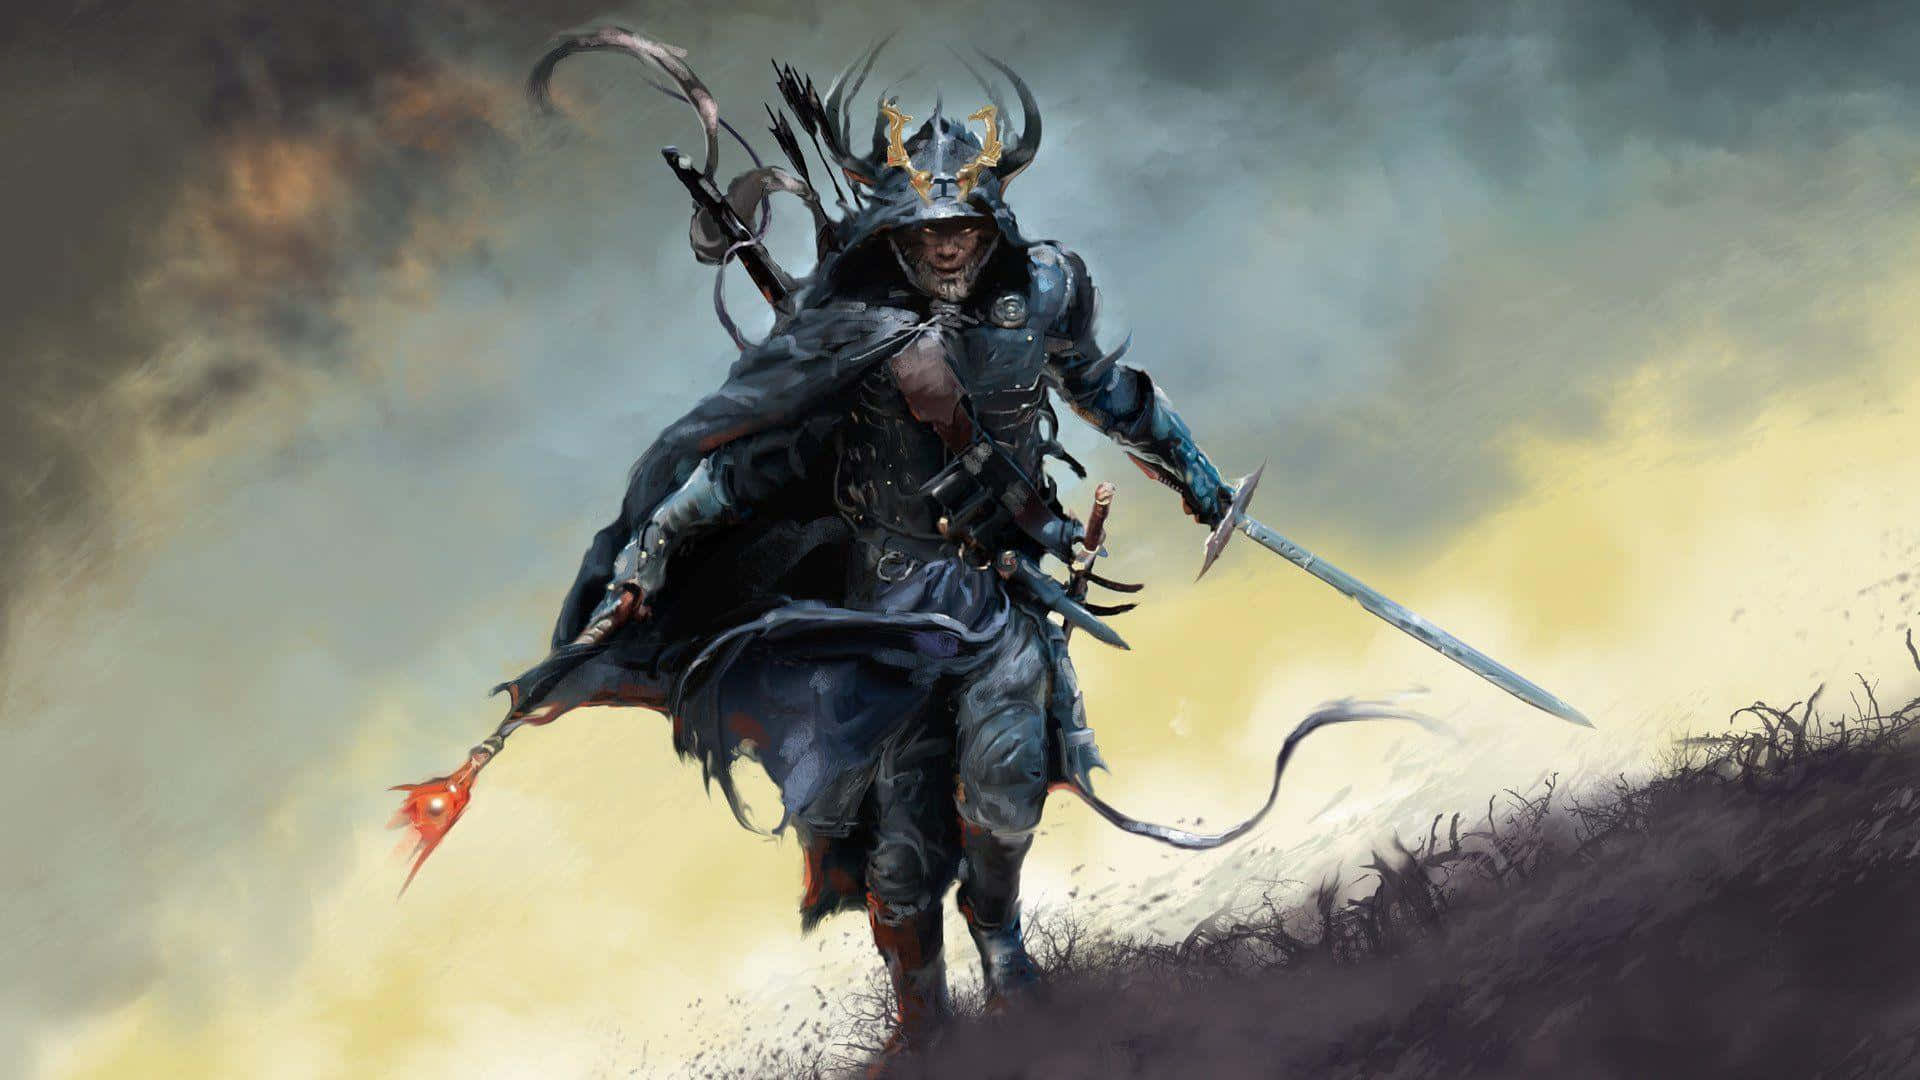 Powerful Samurai Warrior In Battle Background